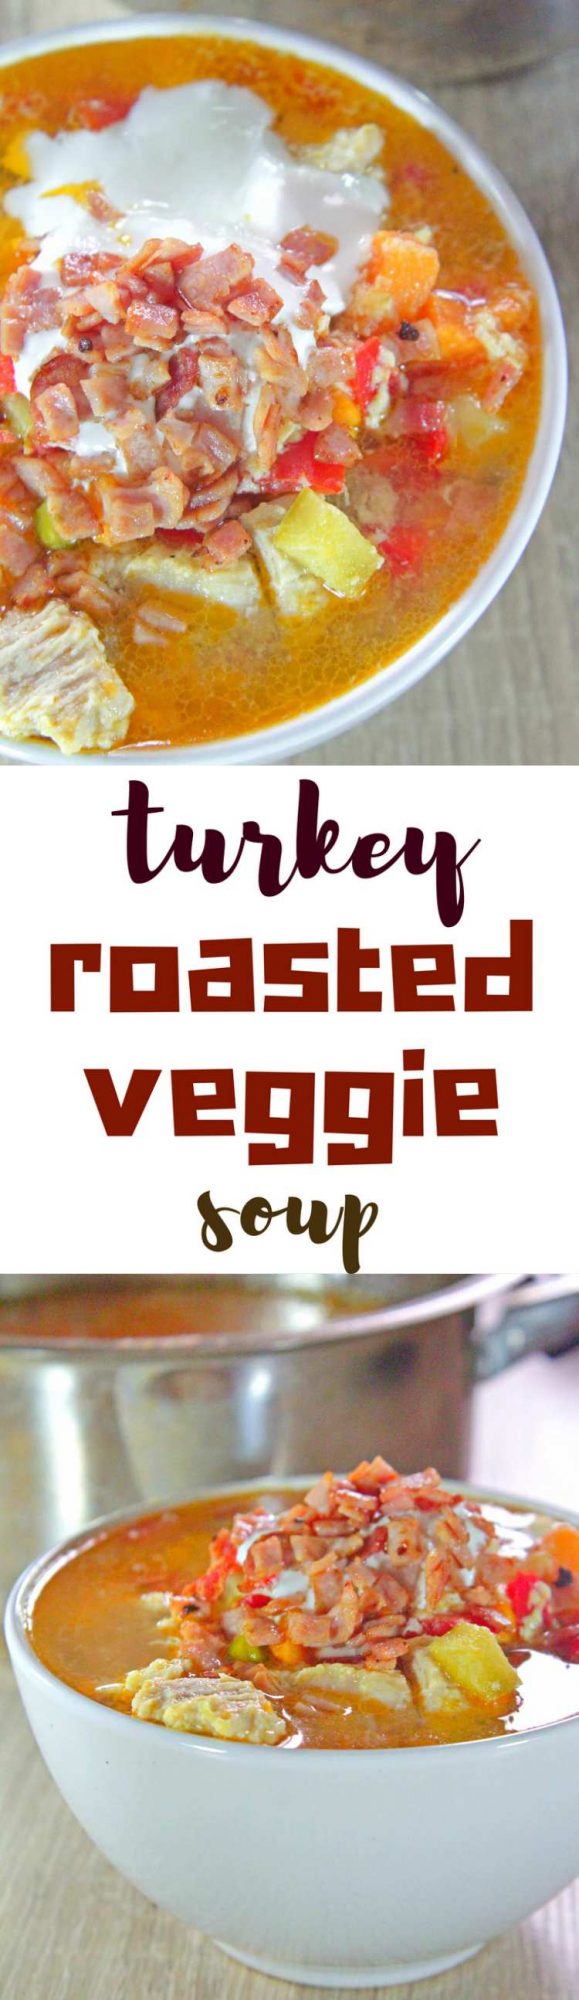 Turkey soup recipe